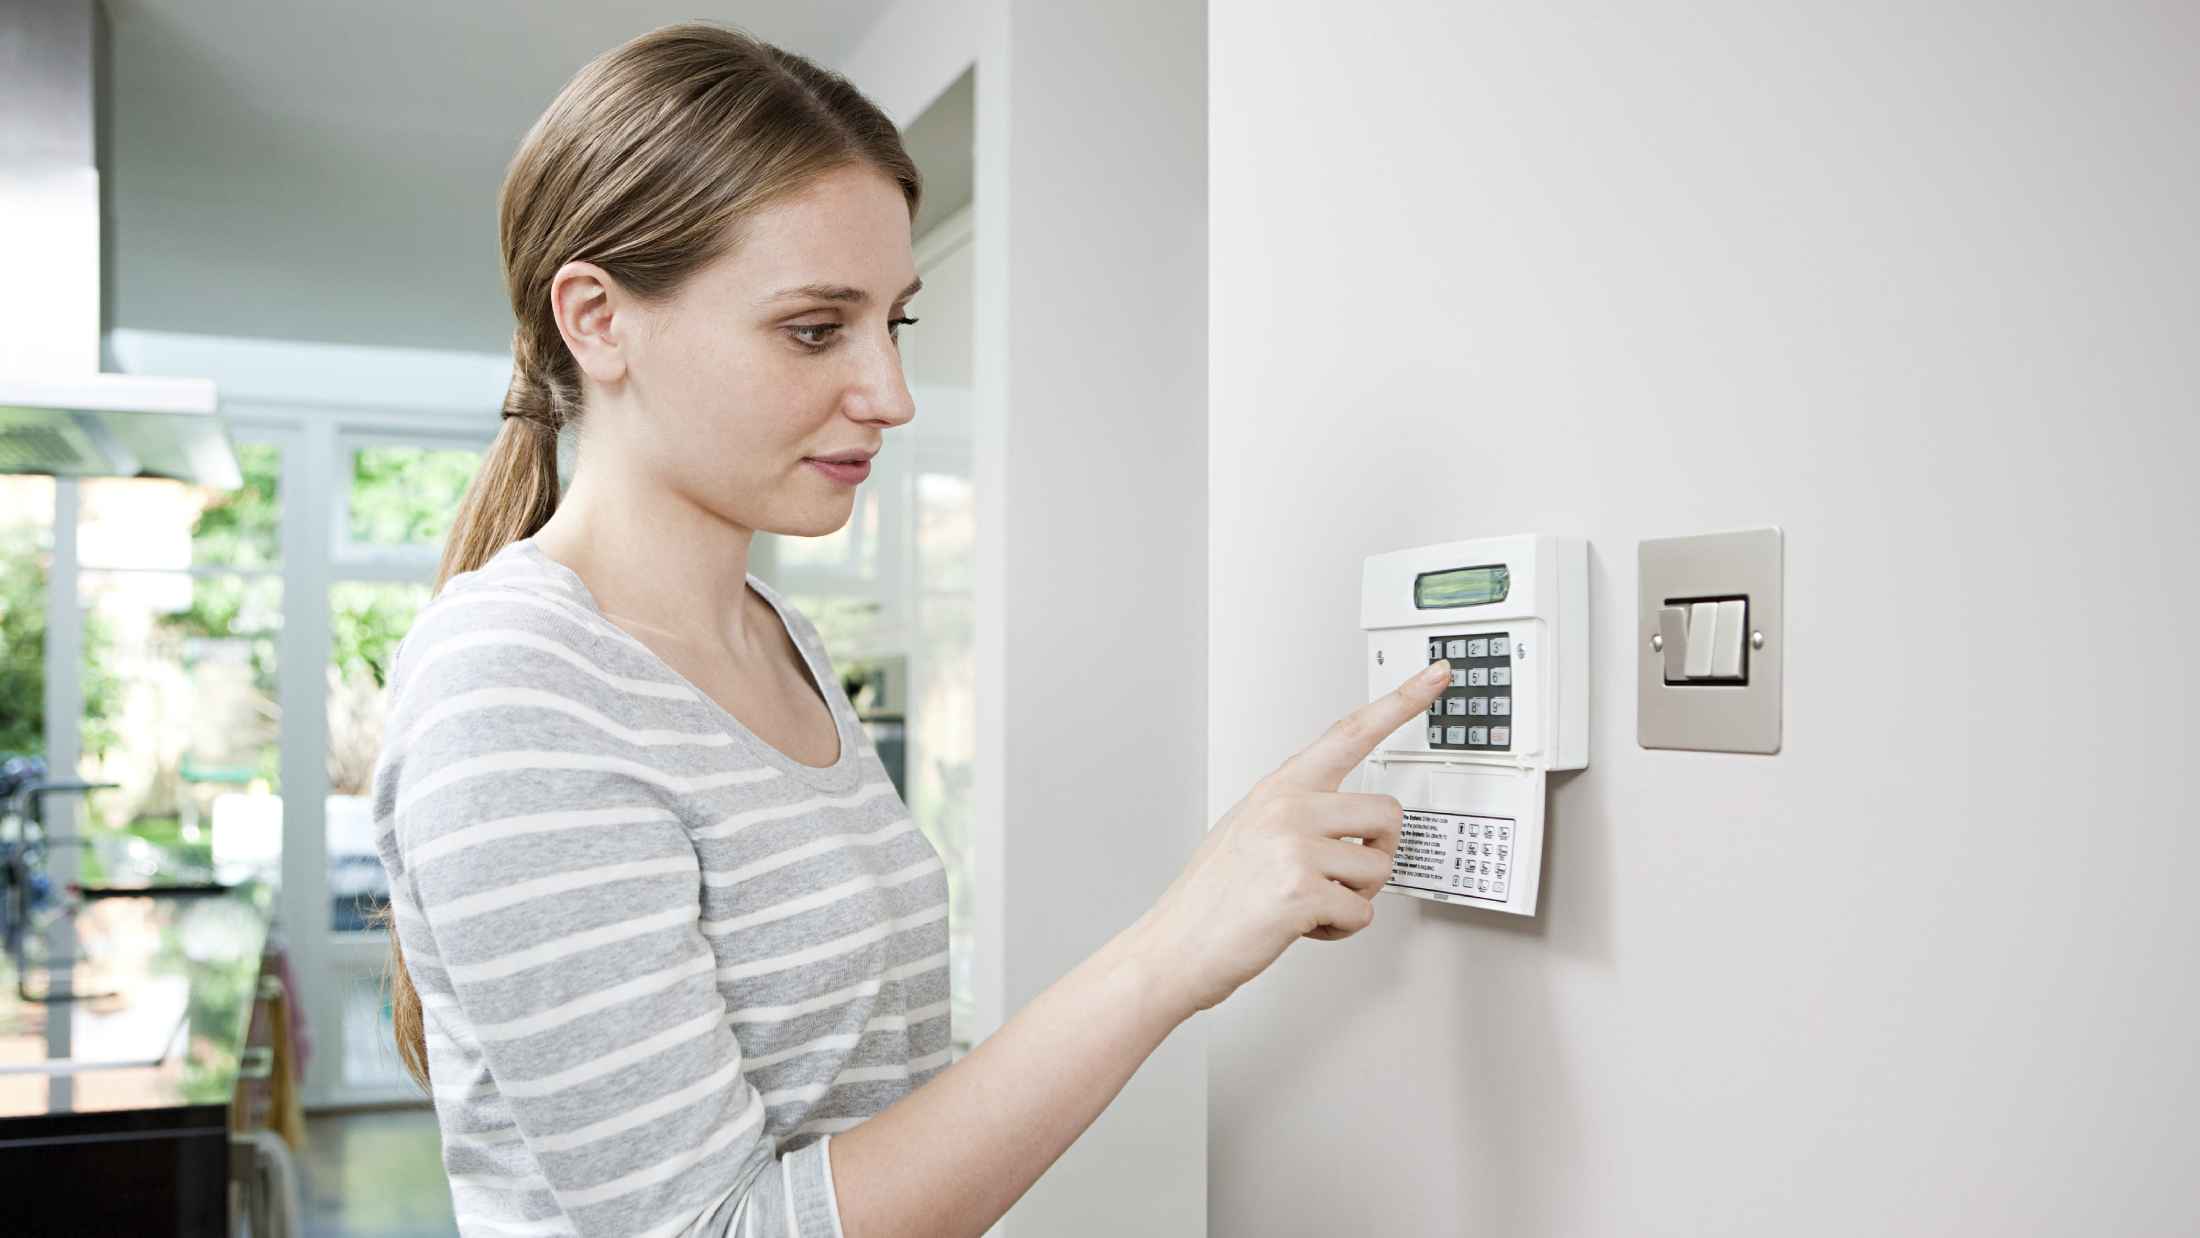 Woman setting burglar alarm via control panel.jpg